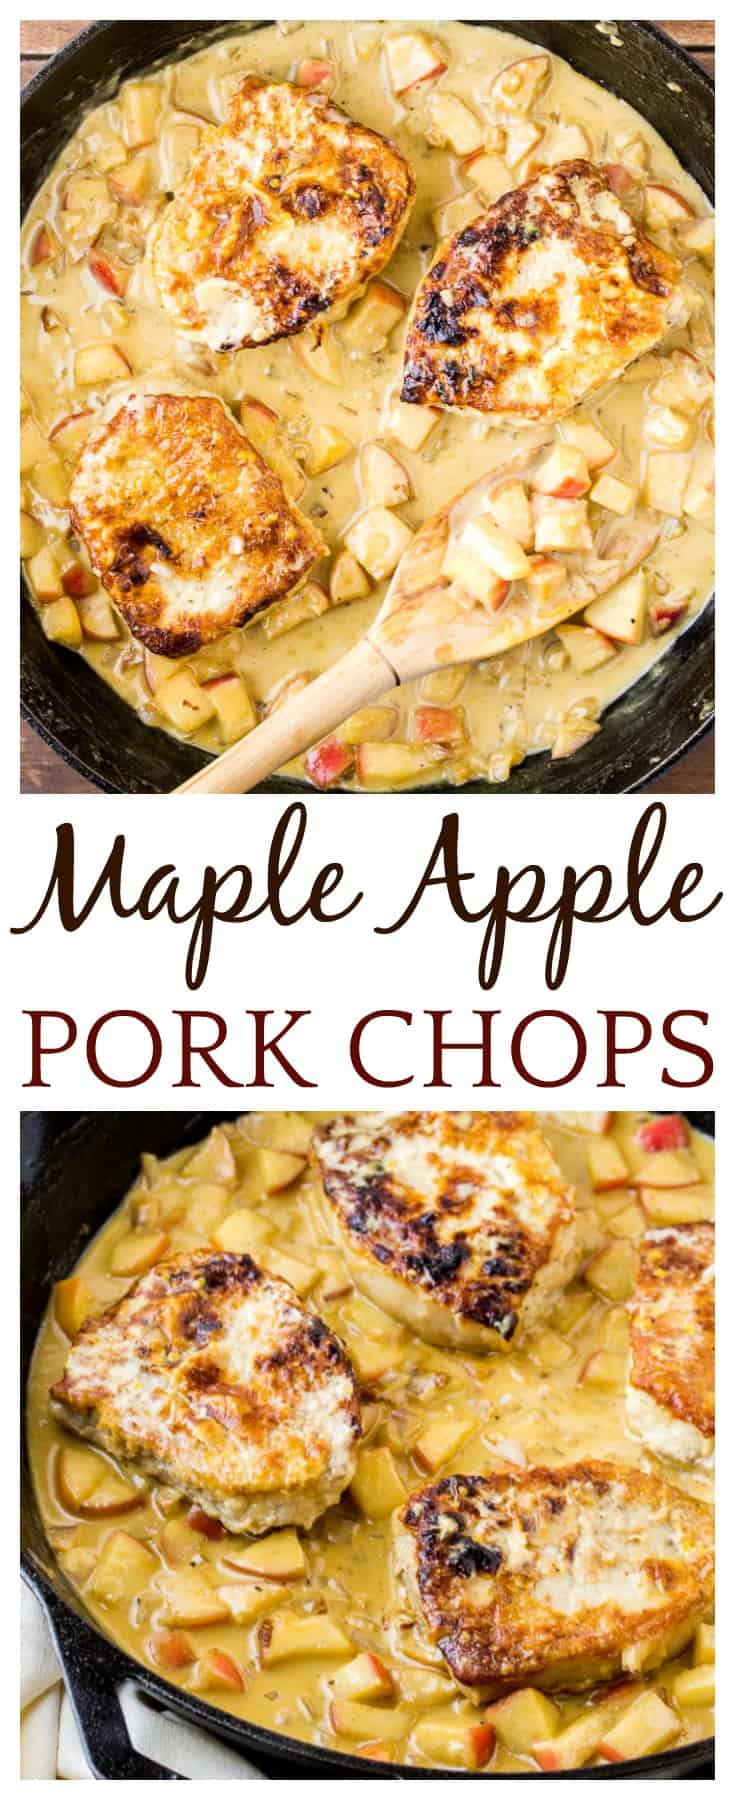 Maple Apple Pork Chops Recipe - Delicious Little Bites